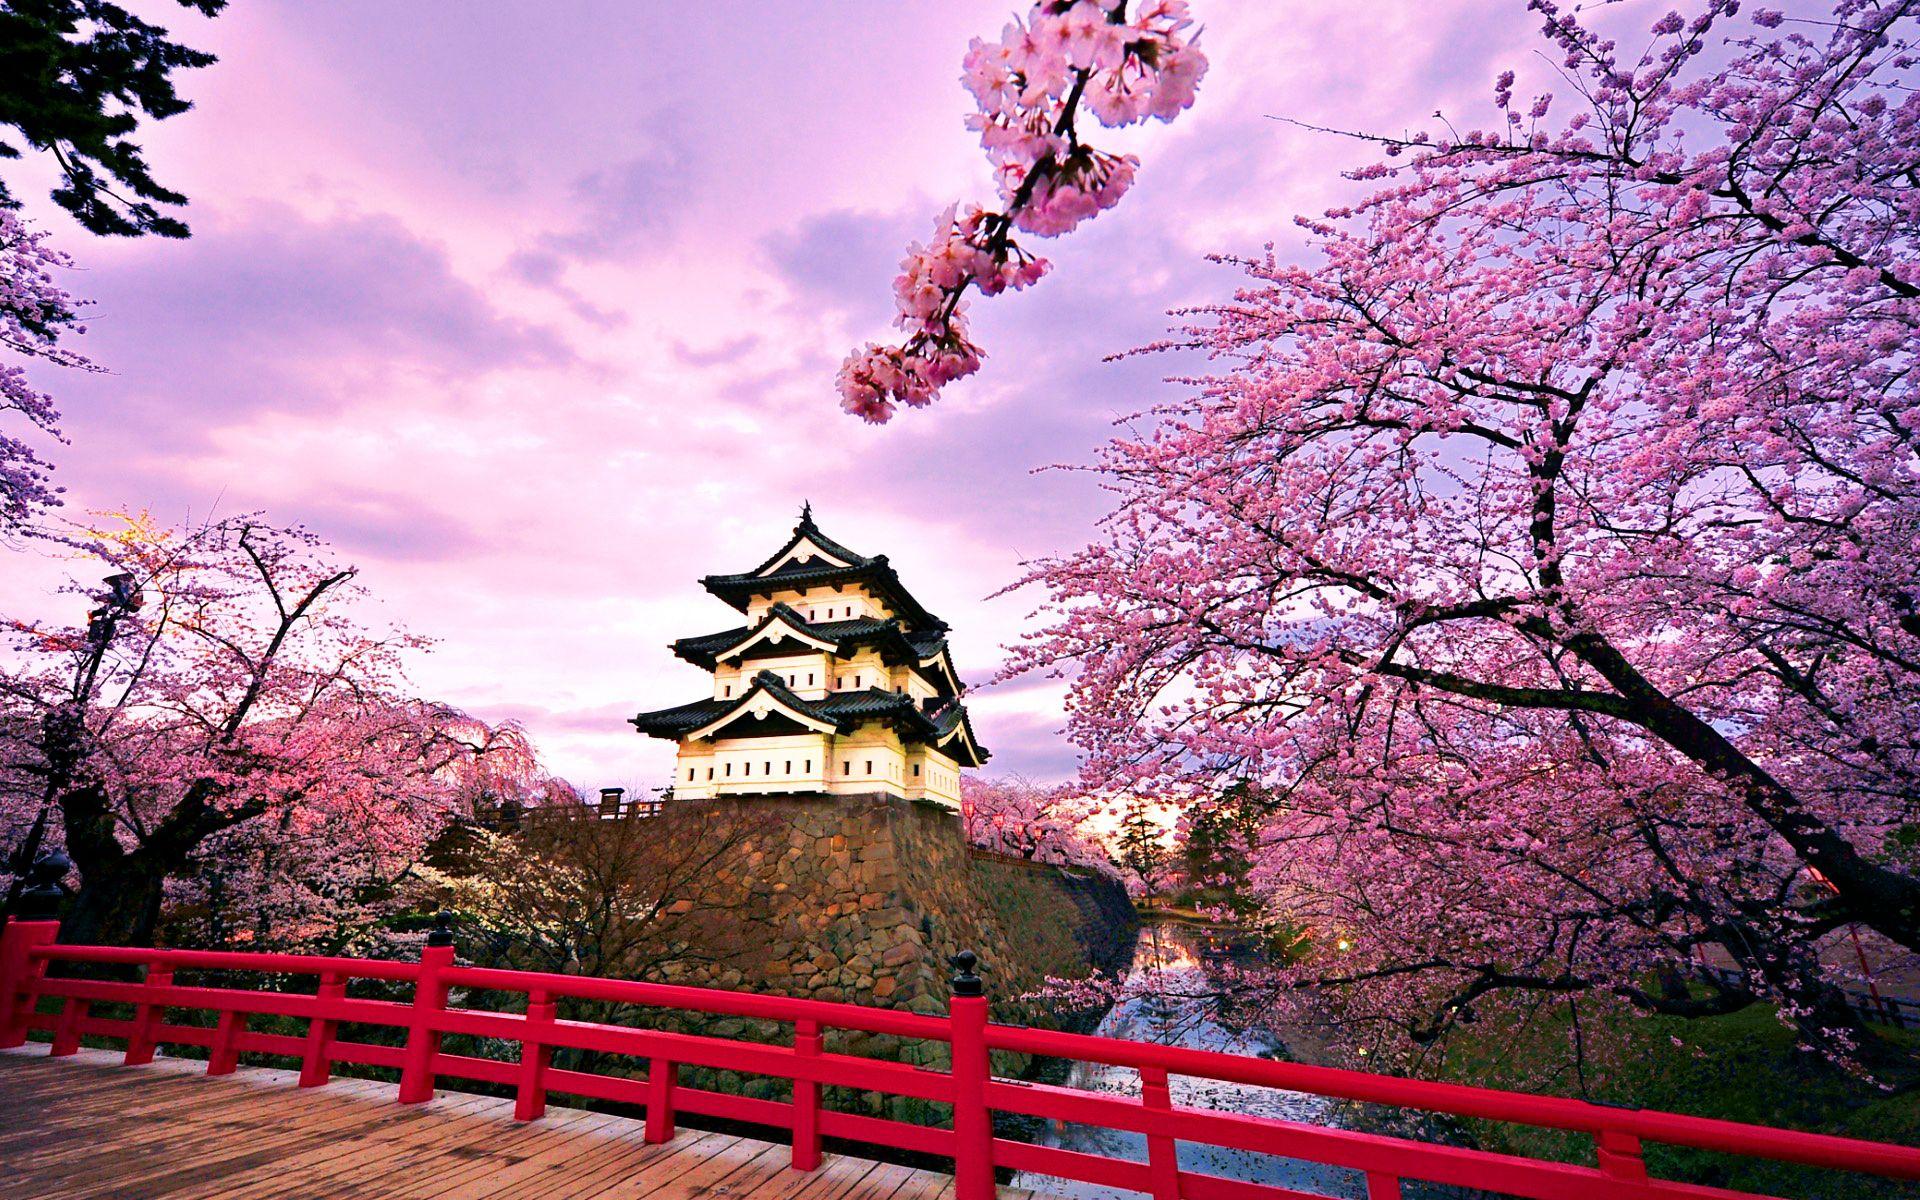 Osaka Japan Wallpapers - Top Free Osaka Japan Backgrounds ...